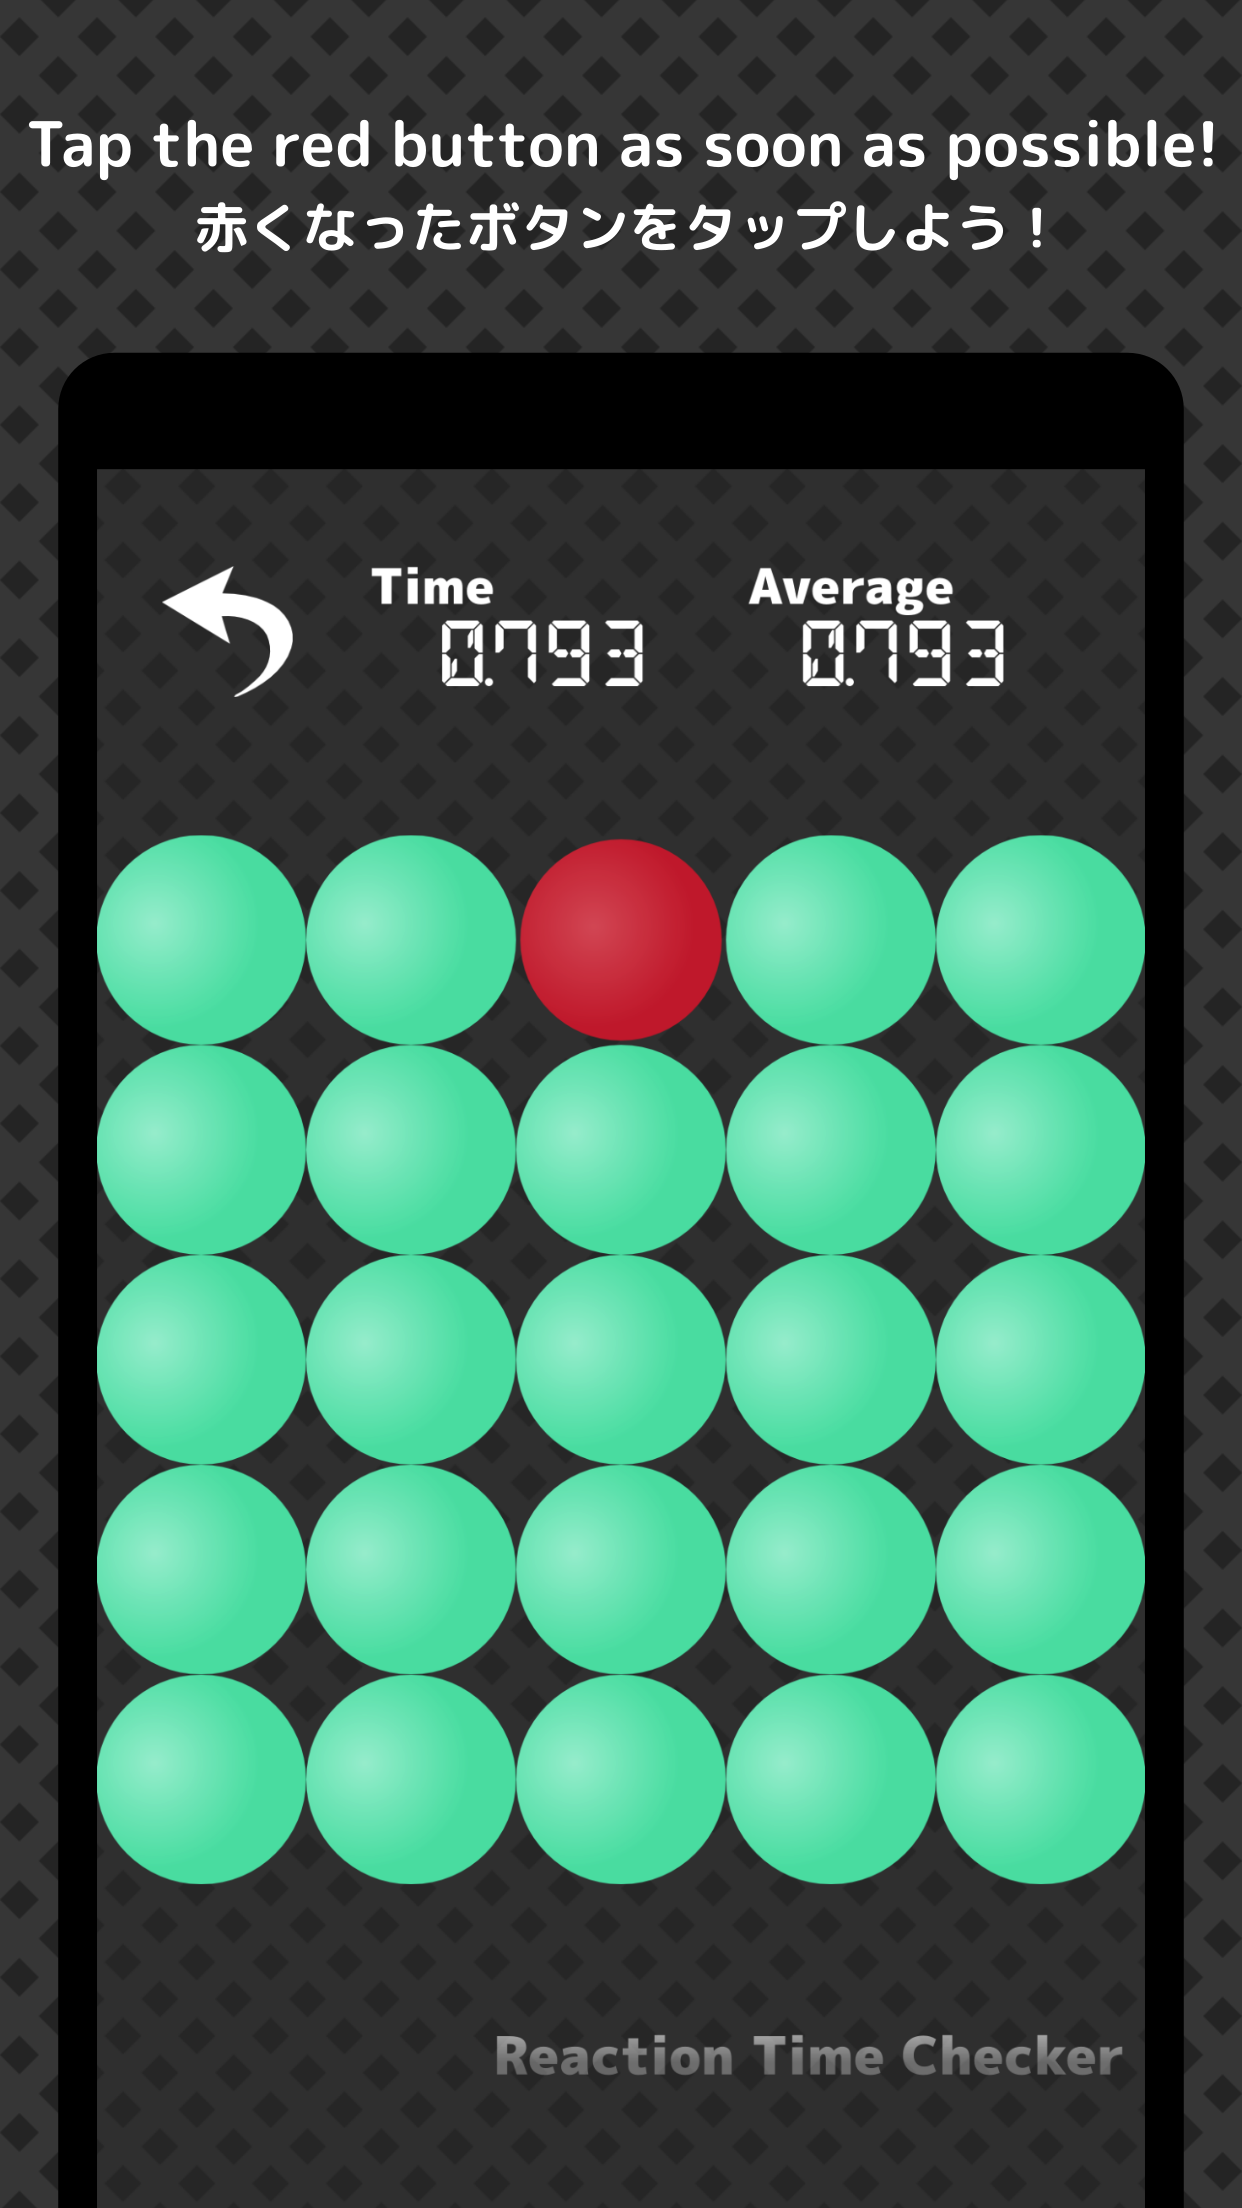 Reaction Time Checker スクリーンショット2 赤くなったボタンをタップしよう！